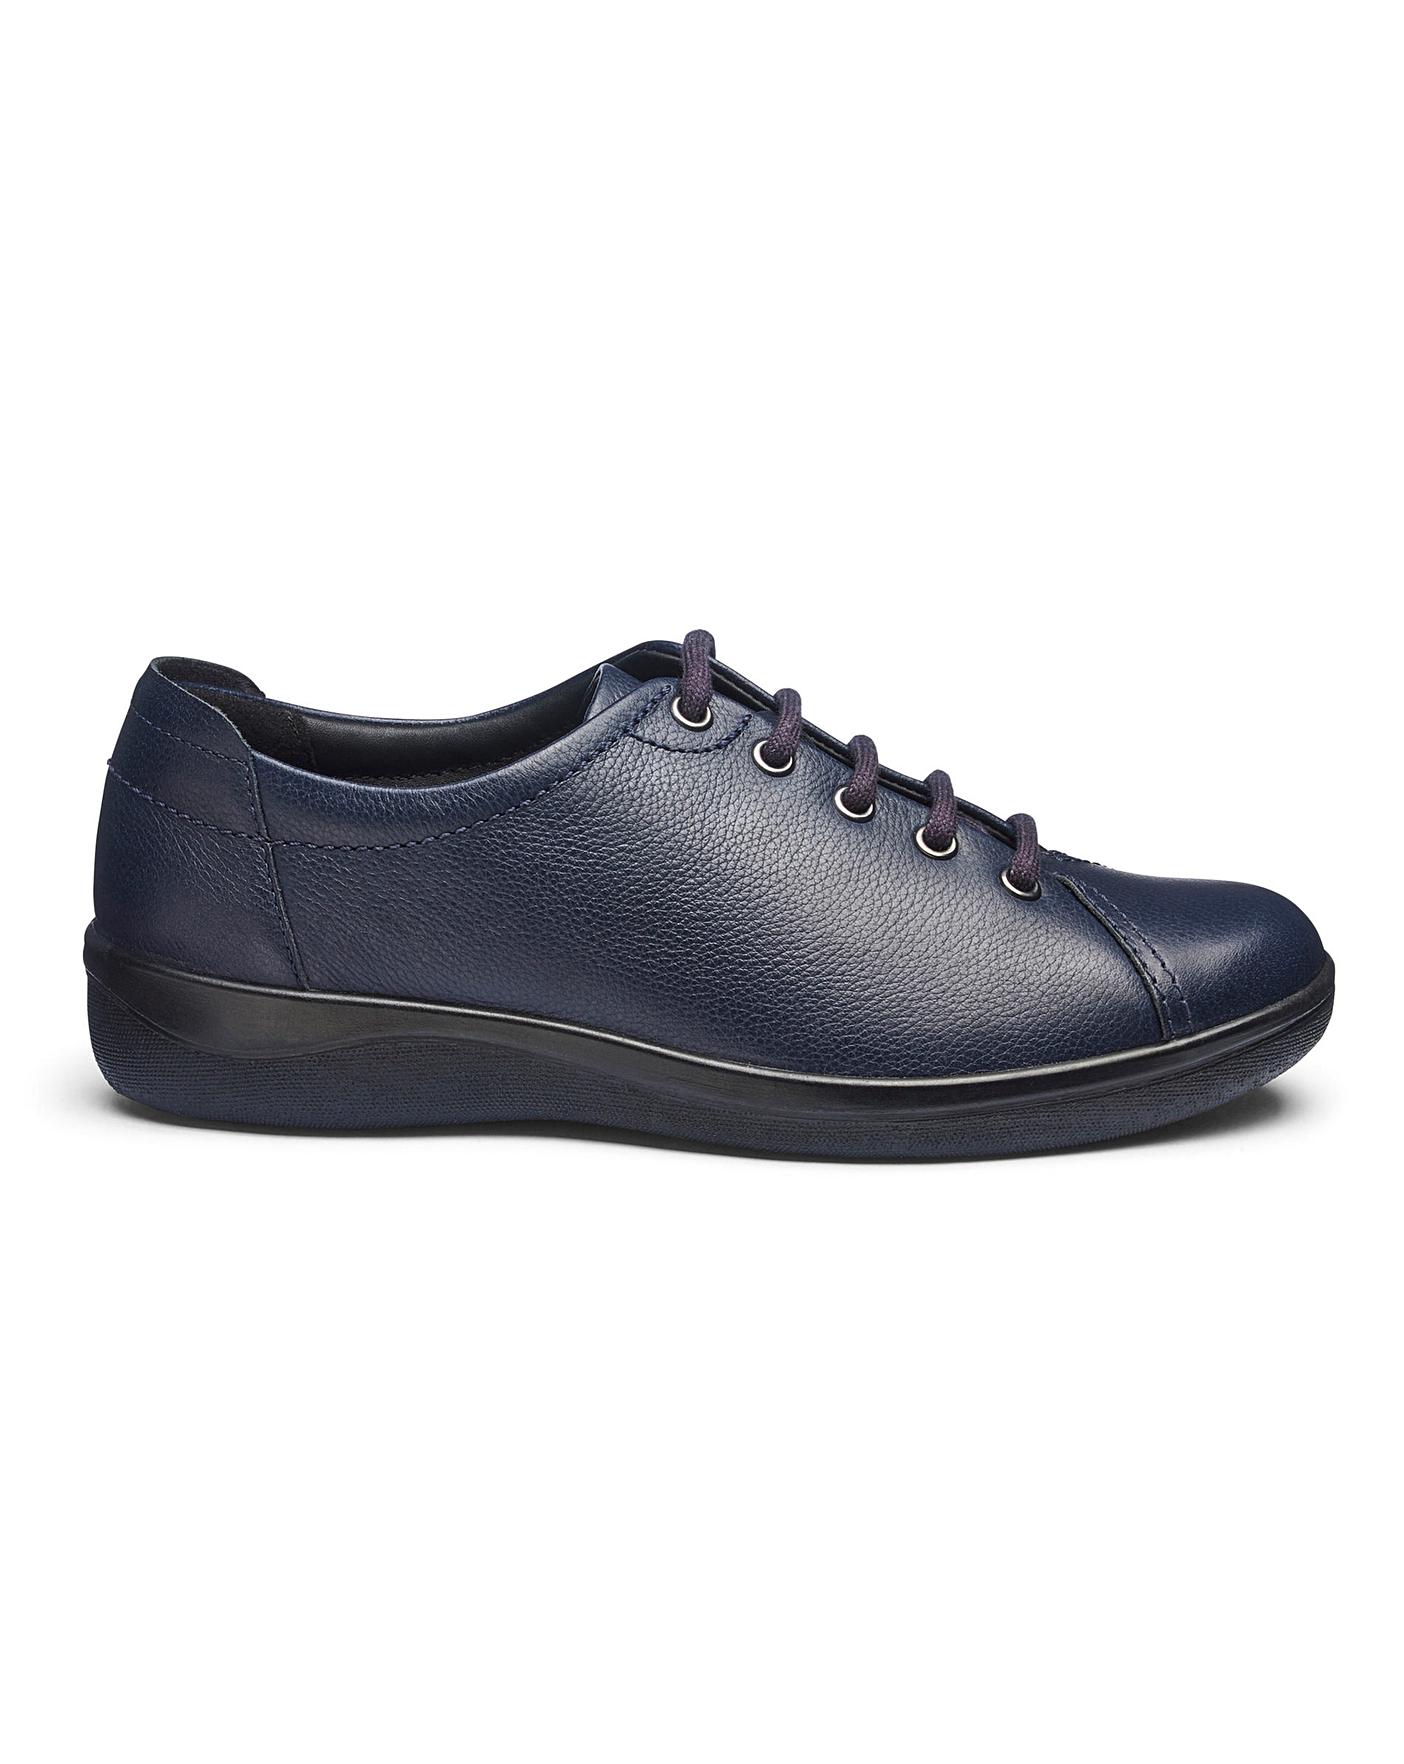 Padders Mens Griff Shoes 607/11 Brown 7.5 UK, 41 EU: Amazon.co.uk: Fashion